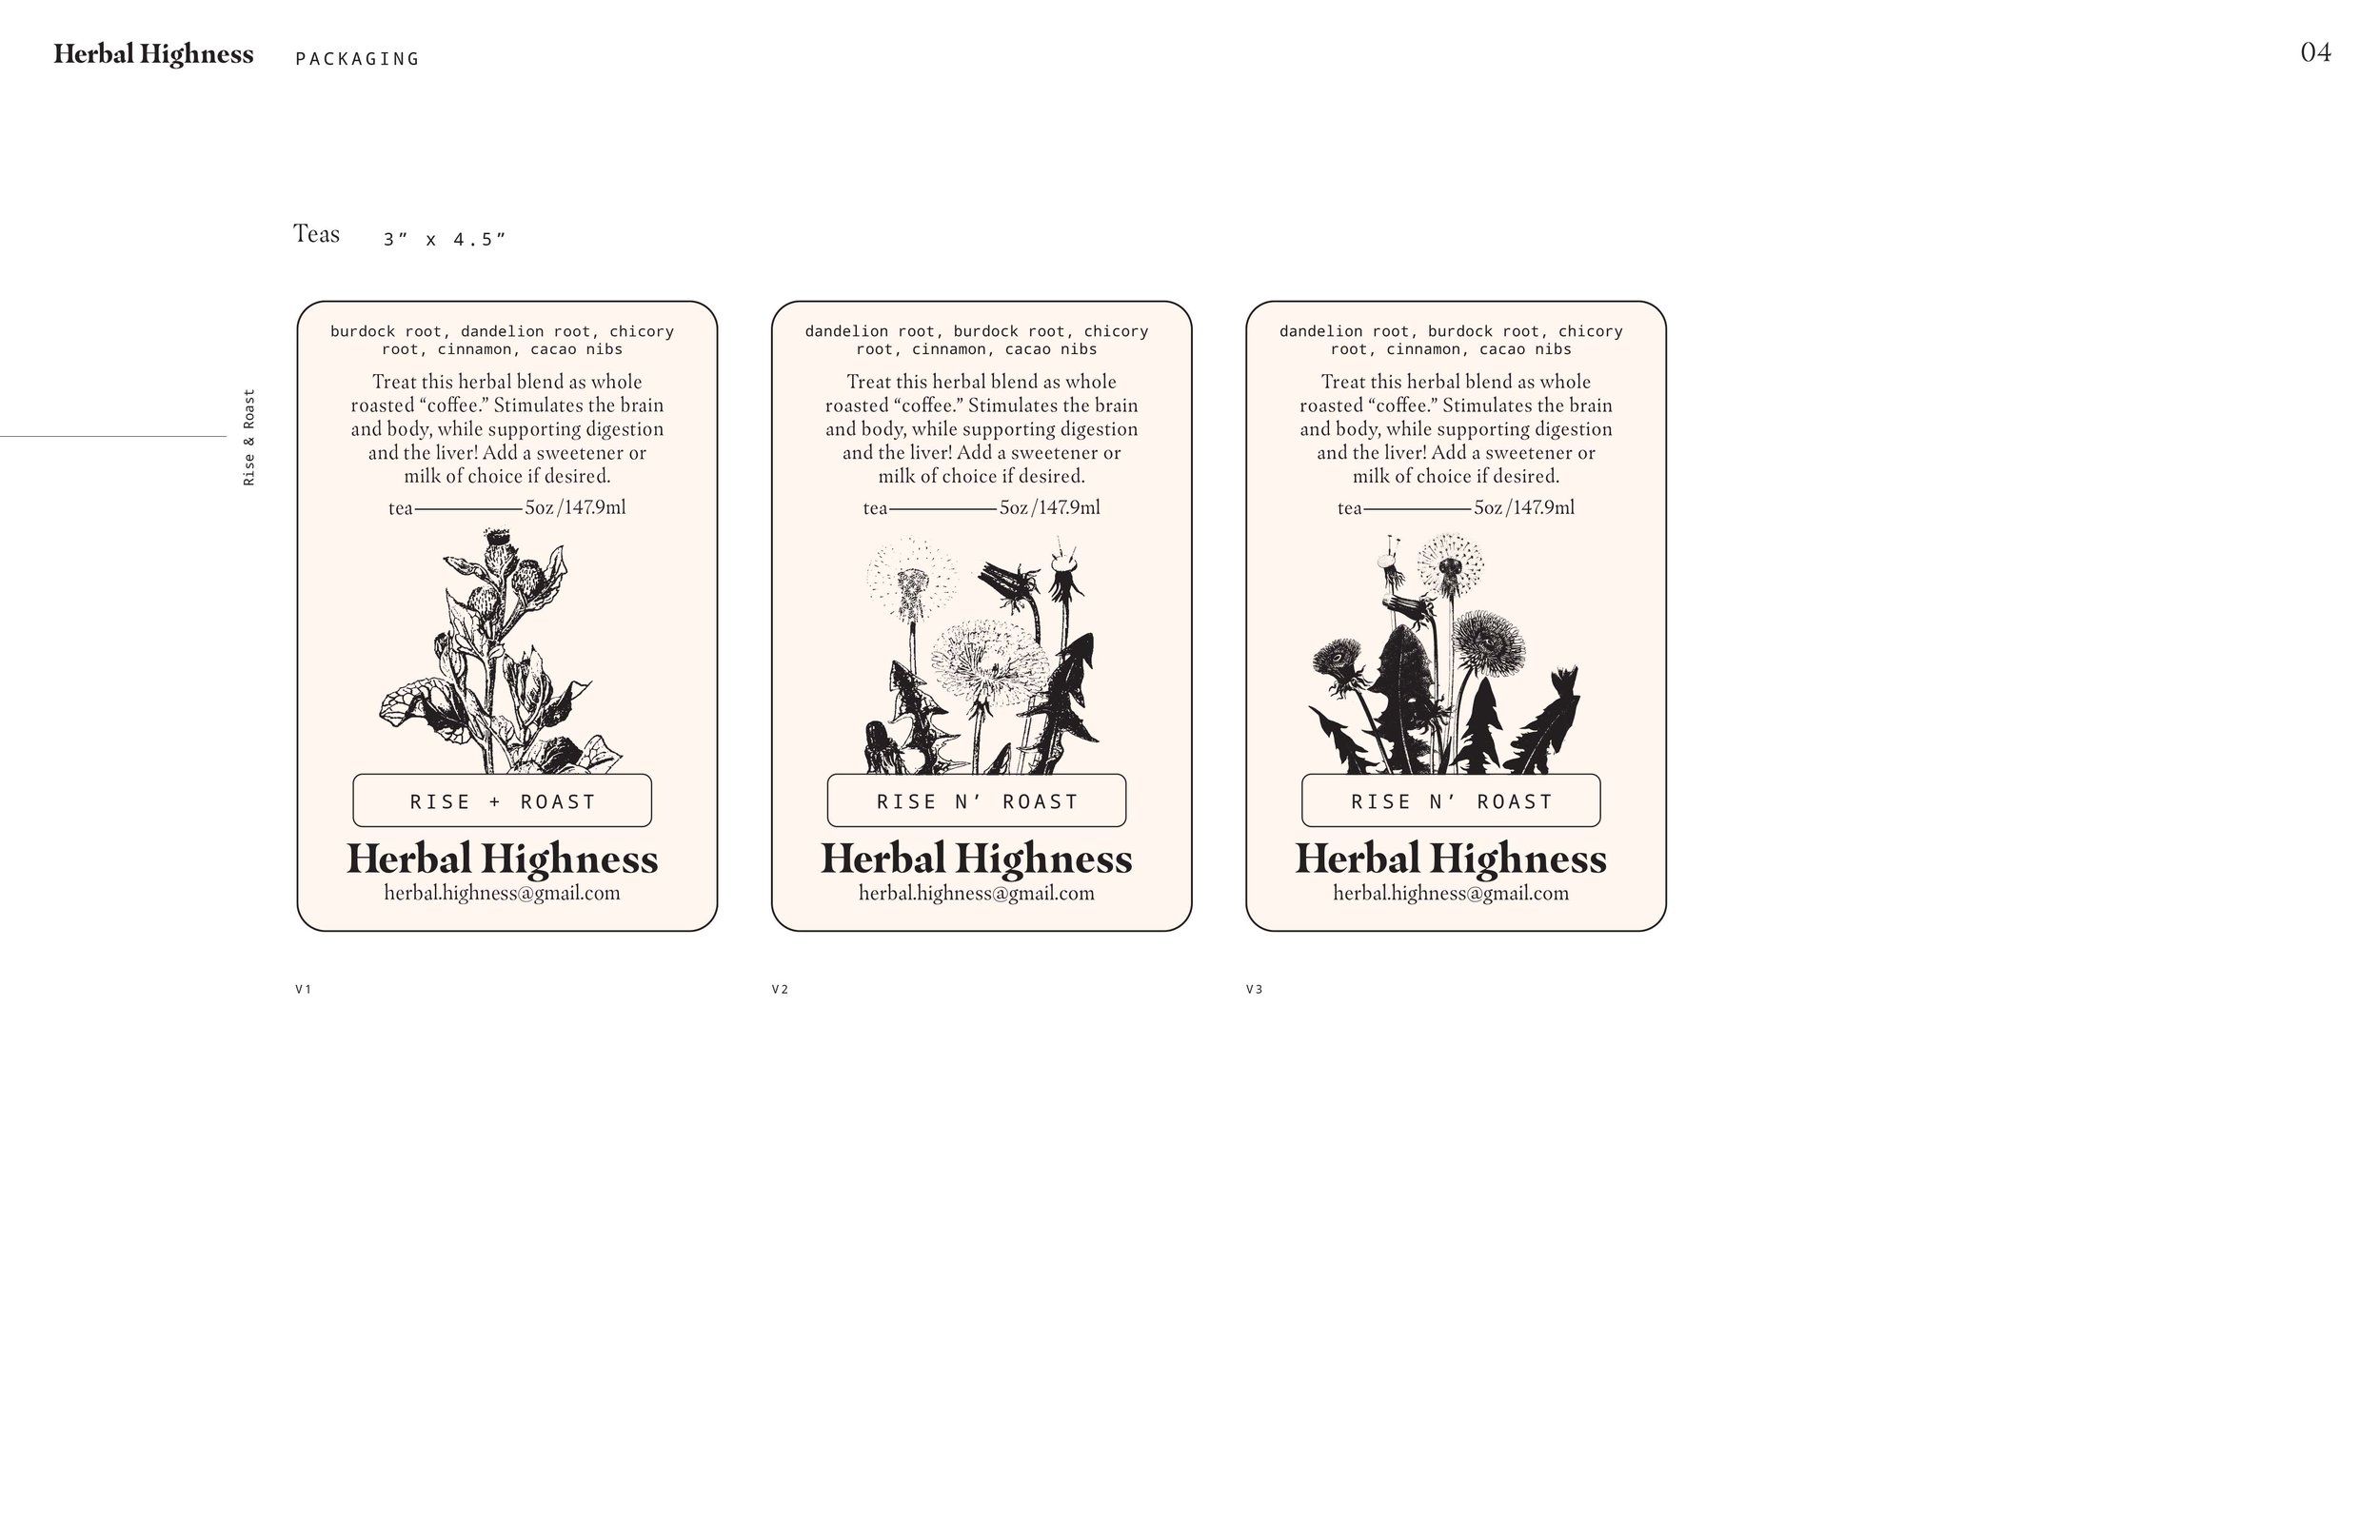 HerbalHighness_Identity_Packaging_Overview-4.jpg